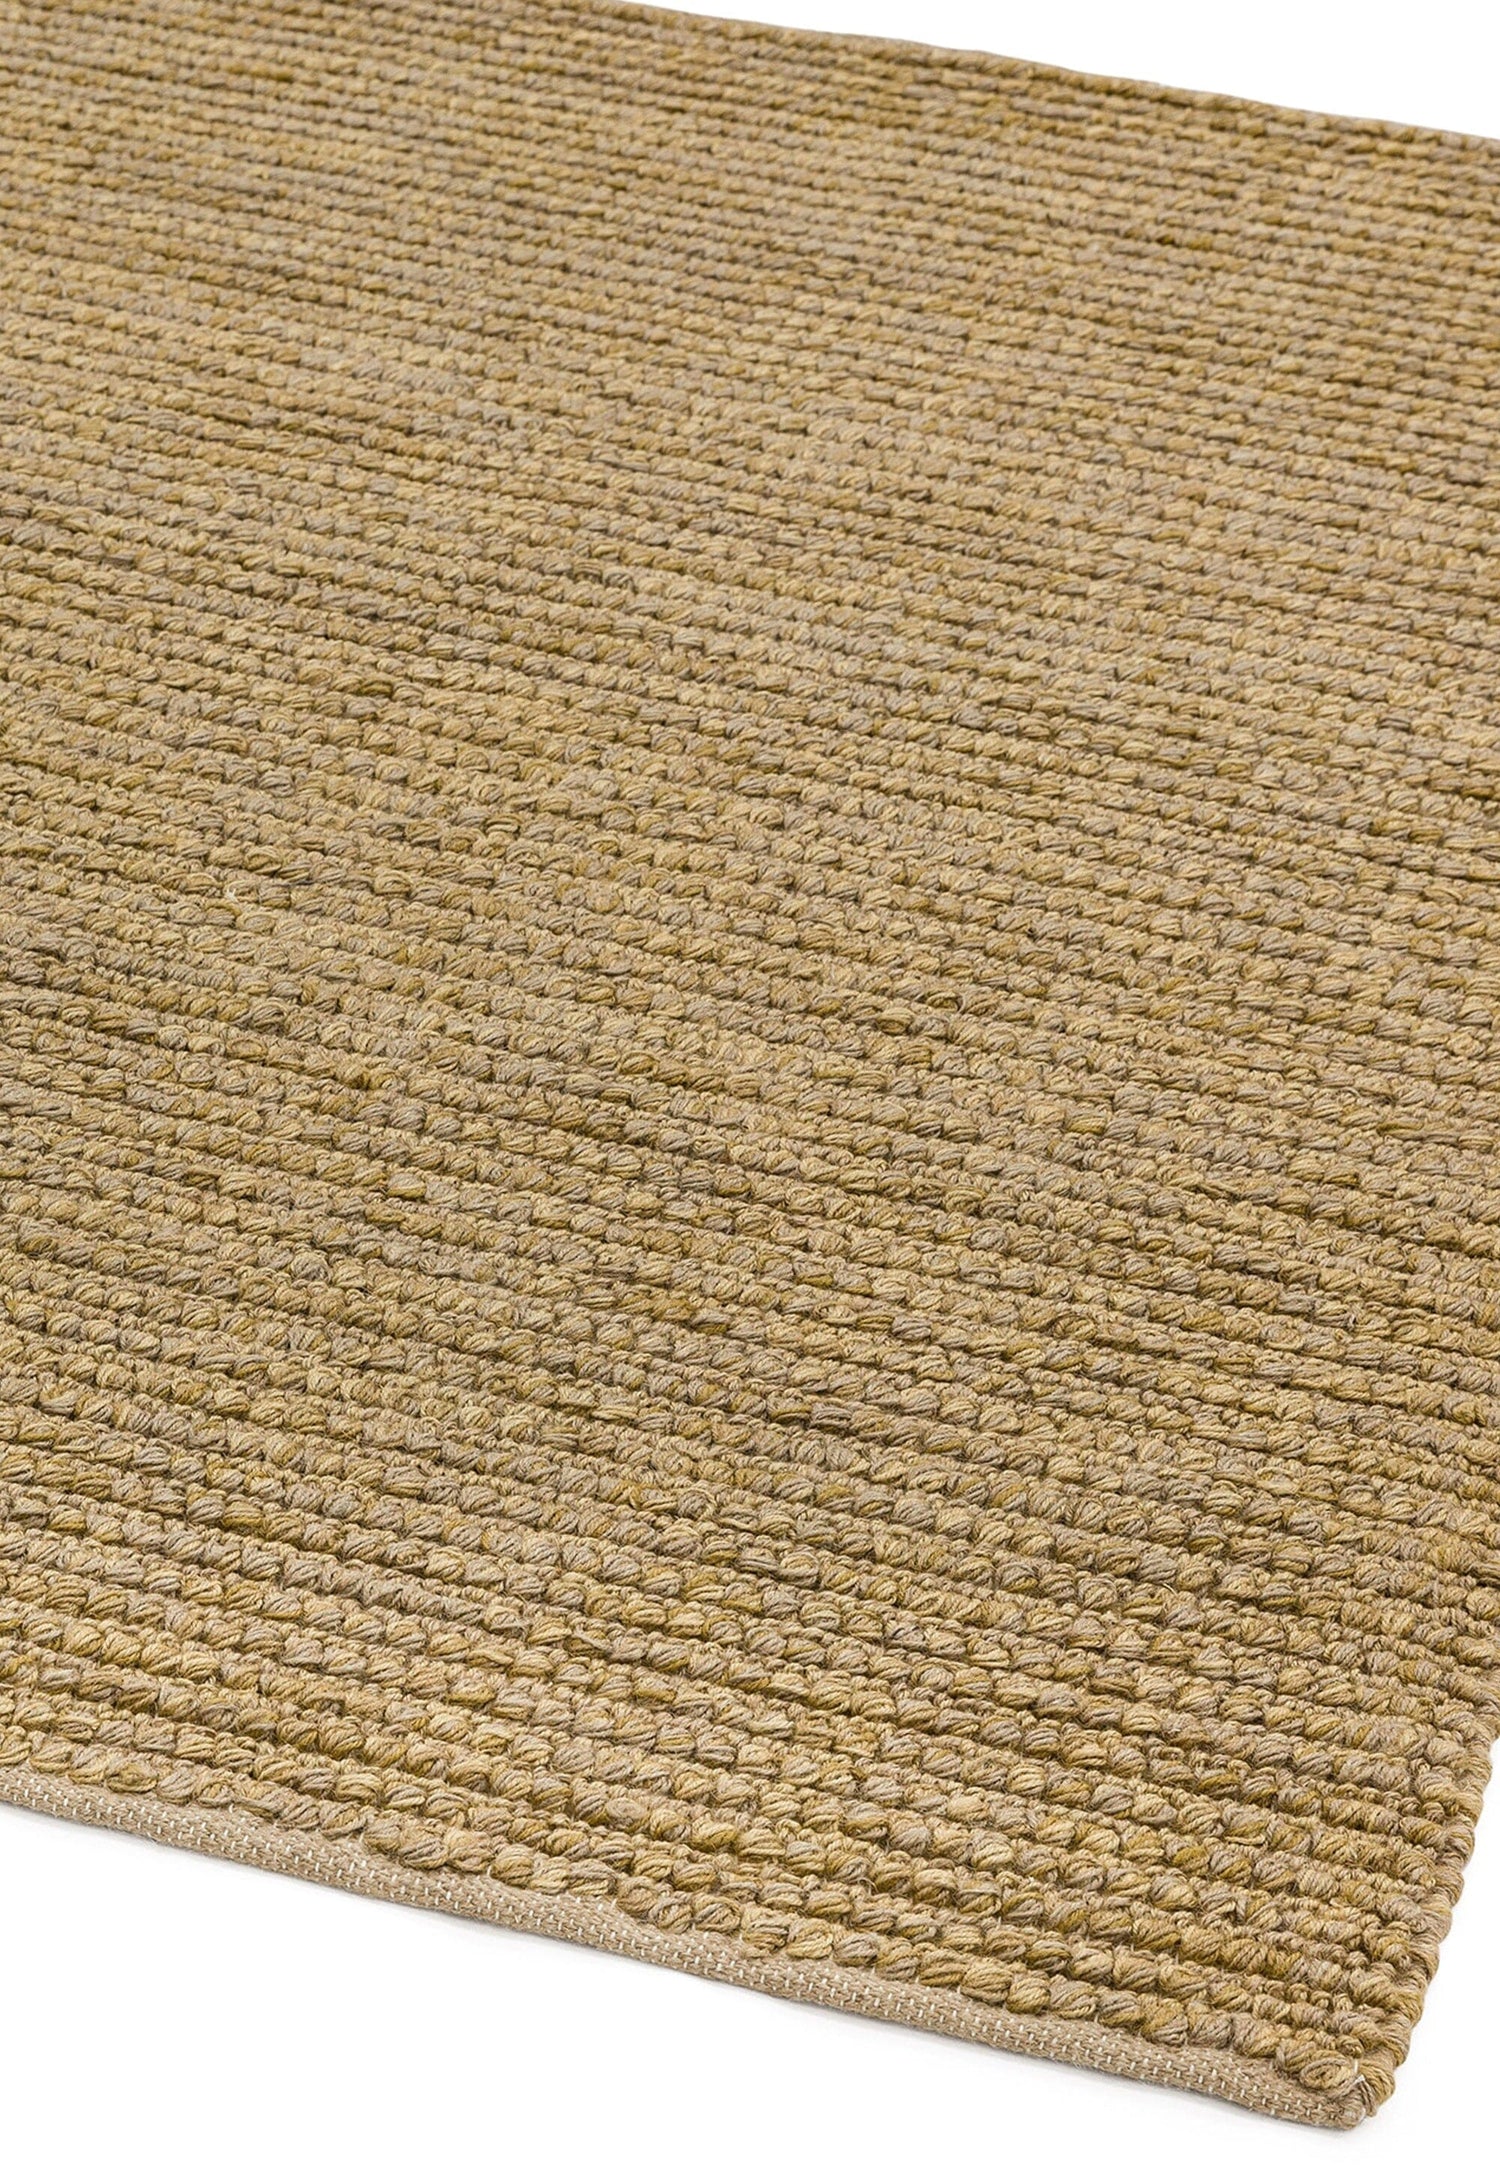  Asiatic Carpets-Asiatic Carpets Jute Loop Hand Woven Rug Natural - 120 x 180cm-Beige, Natural 941 